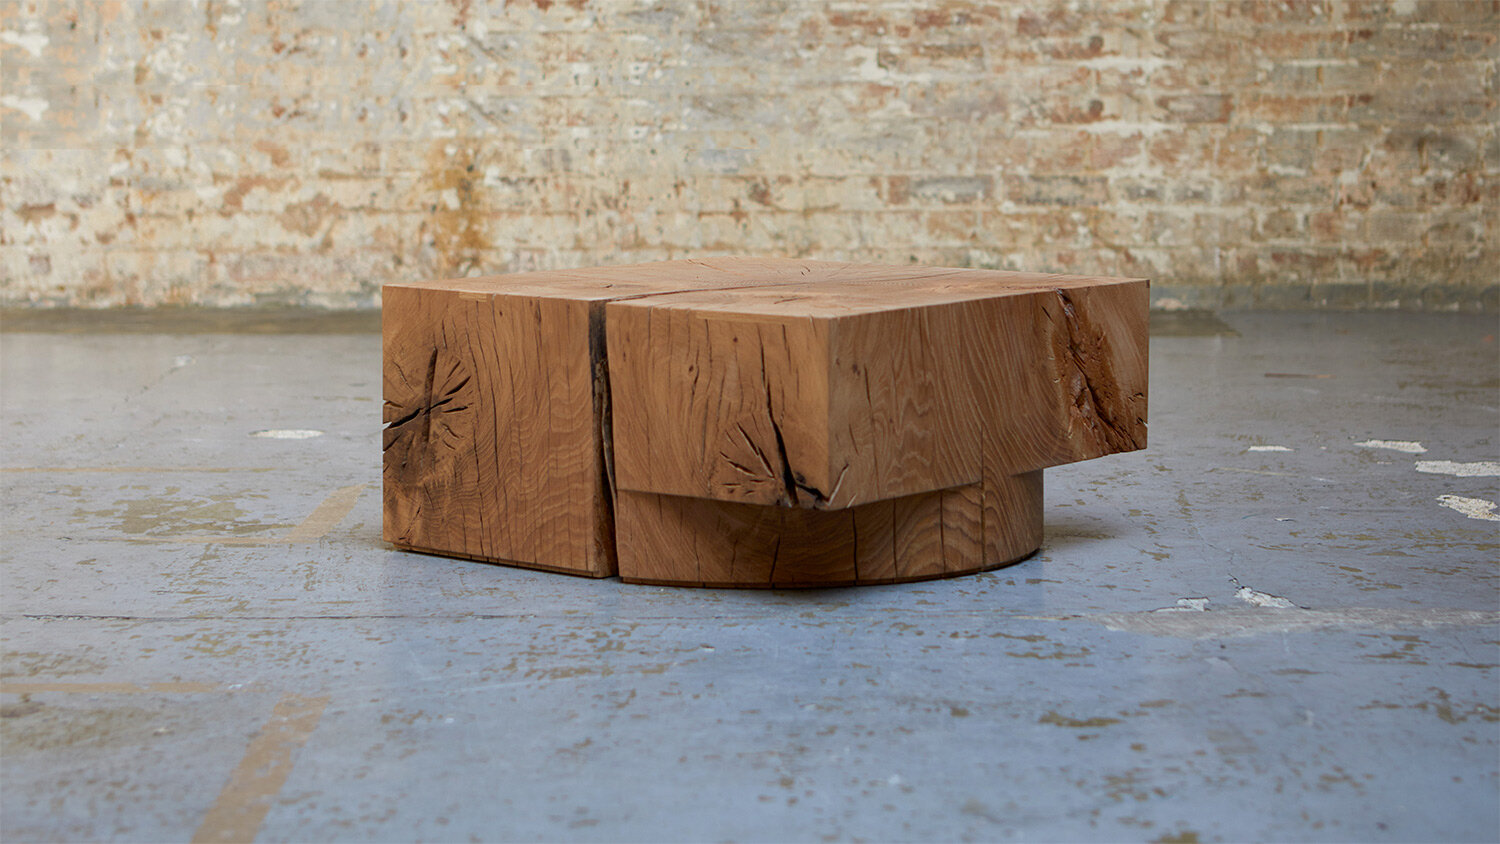 Carved wood coffee table against brick wall.jpg